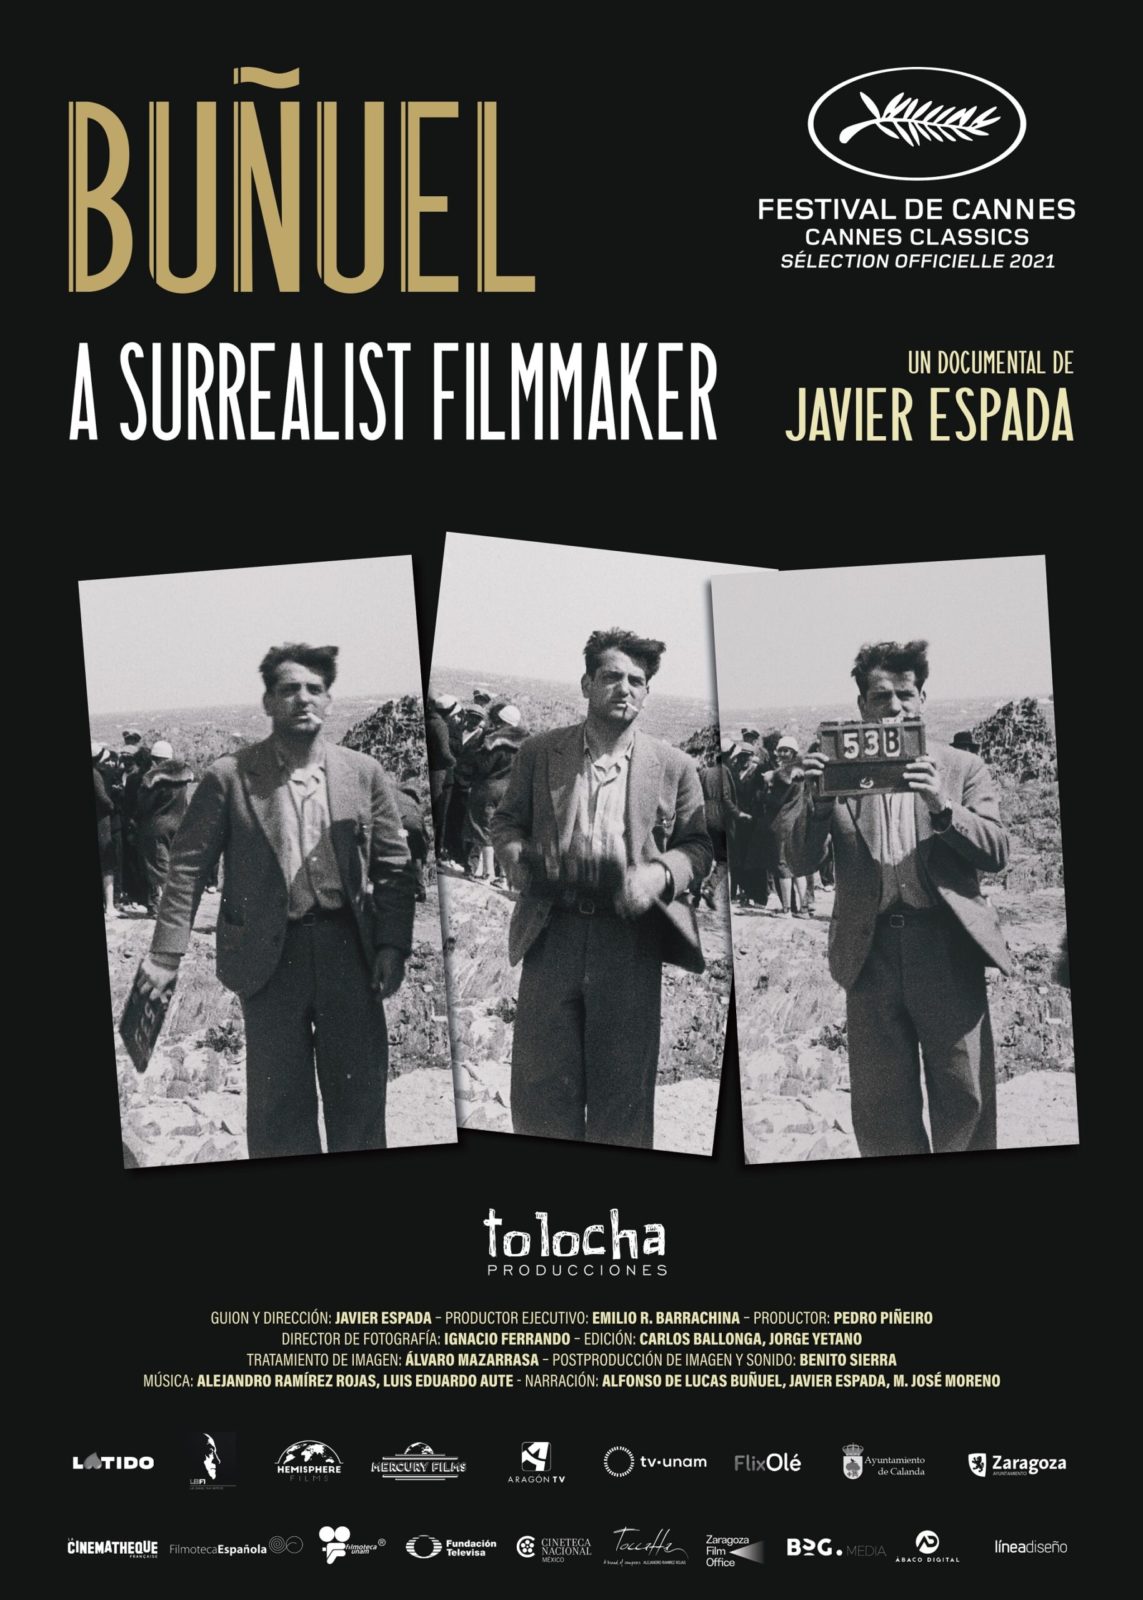 BUÑUEL: A SURREALIST FILMMAKER